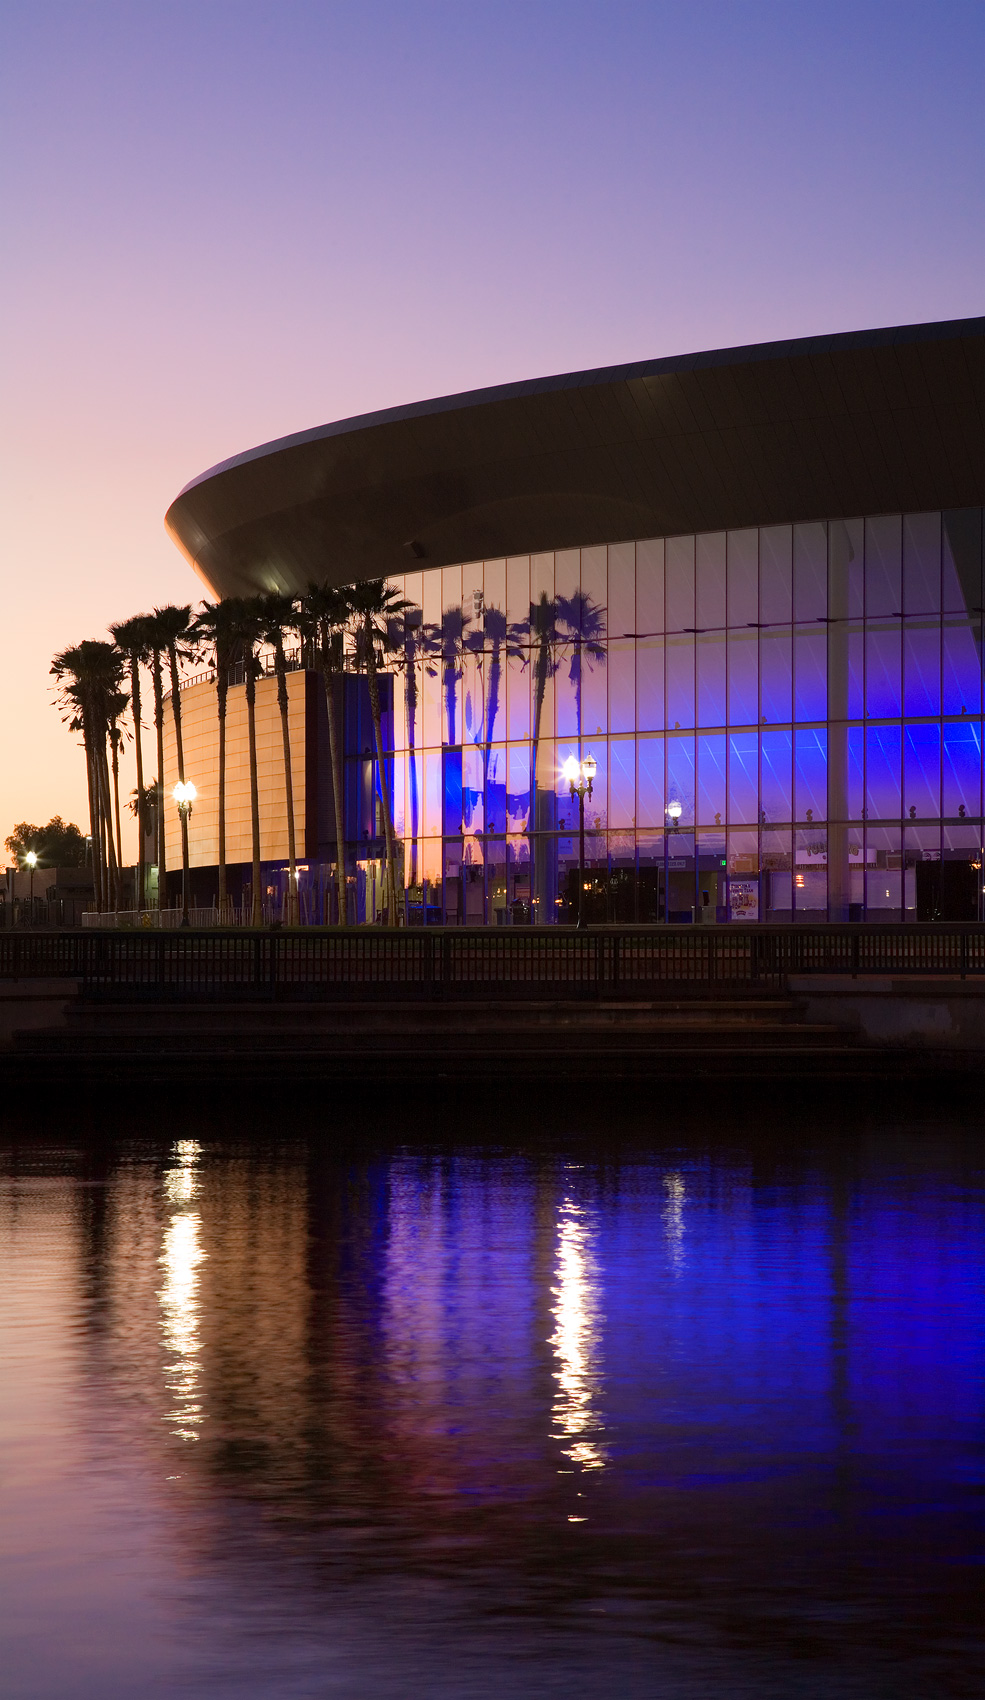 Twilight image of Stockton Arena with purple hues